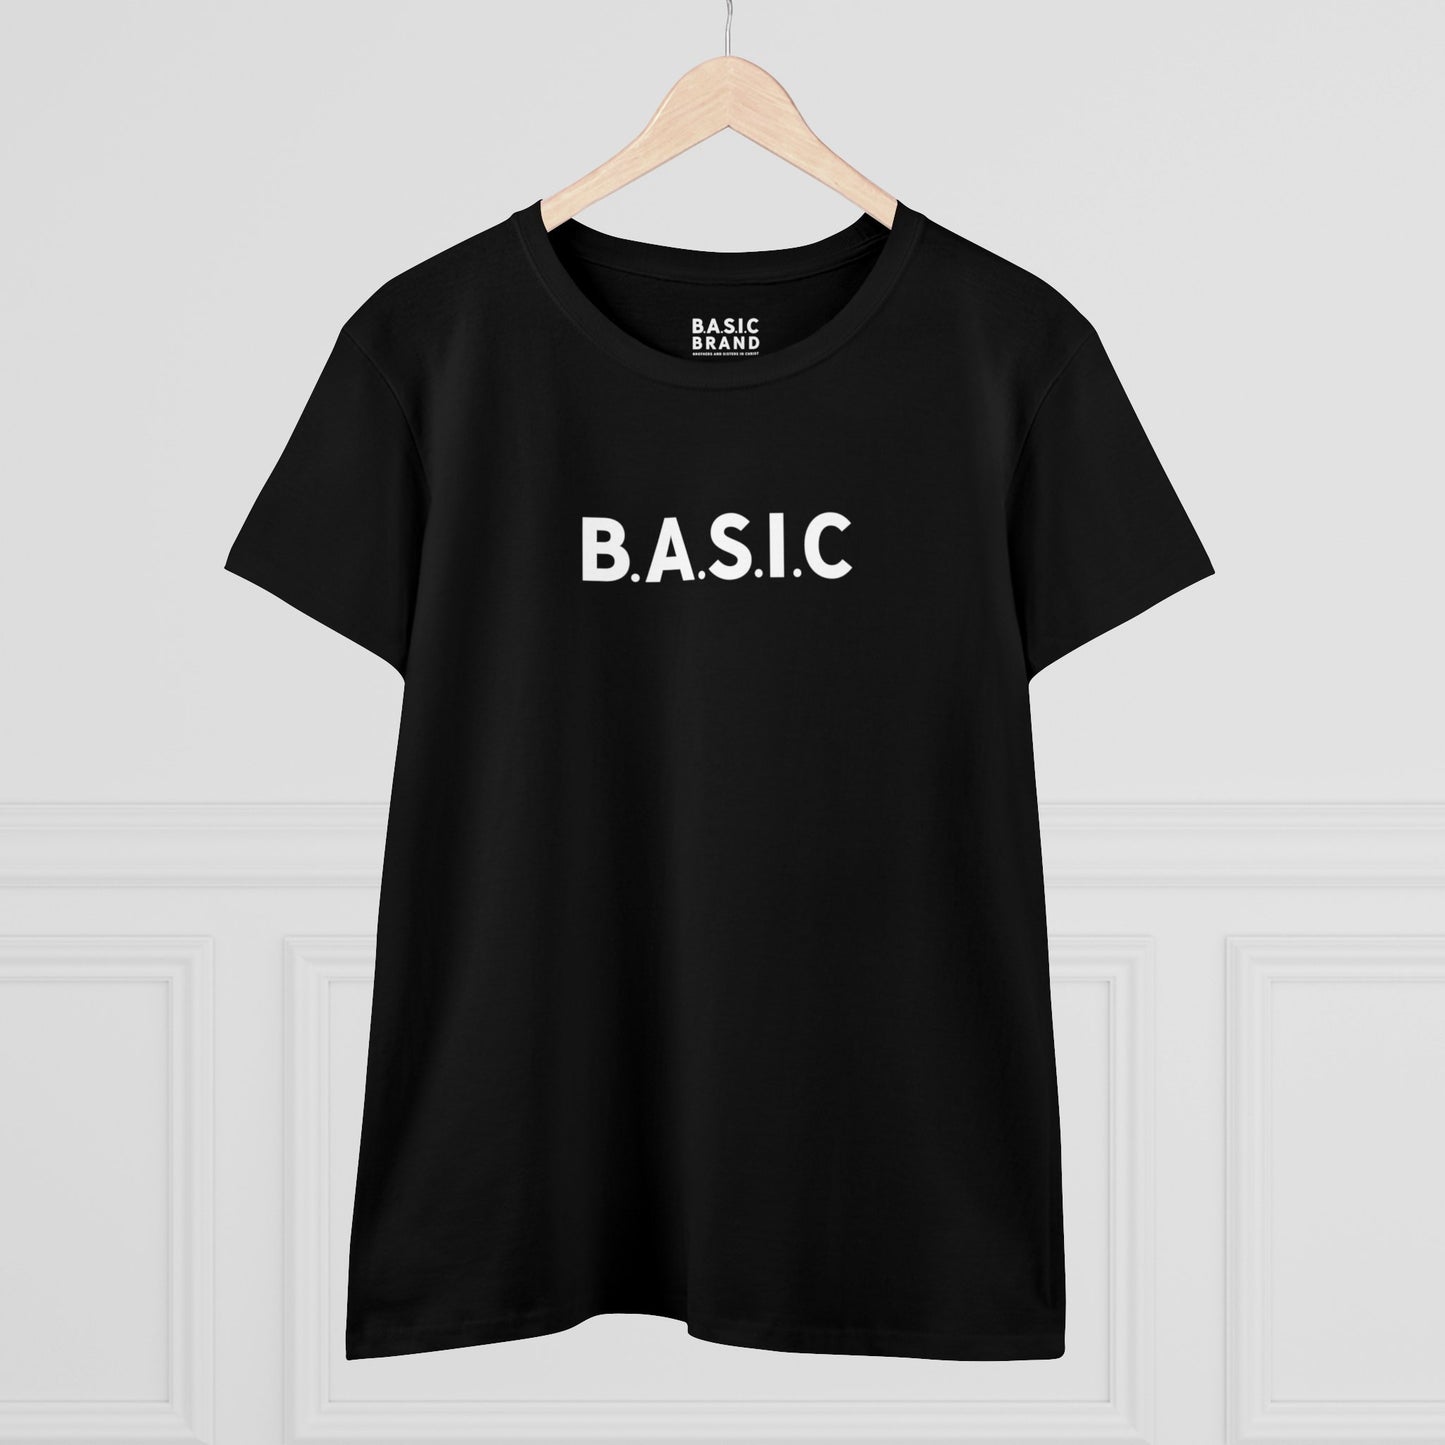 Women's B.A.S.I.C "Medium Sized Logo" White Font Tee Shirt